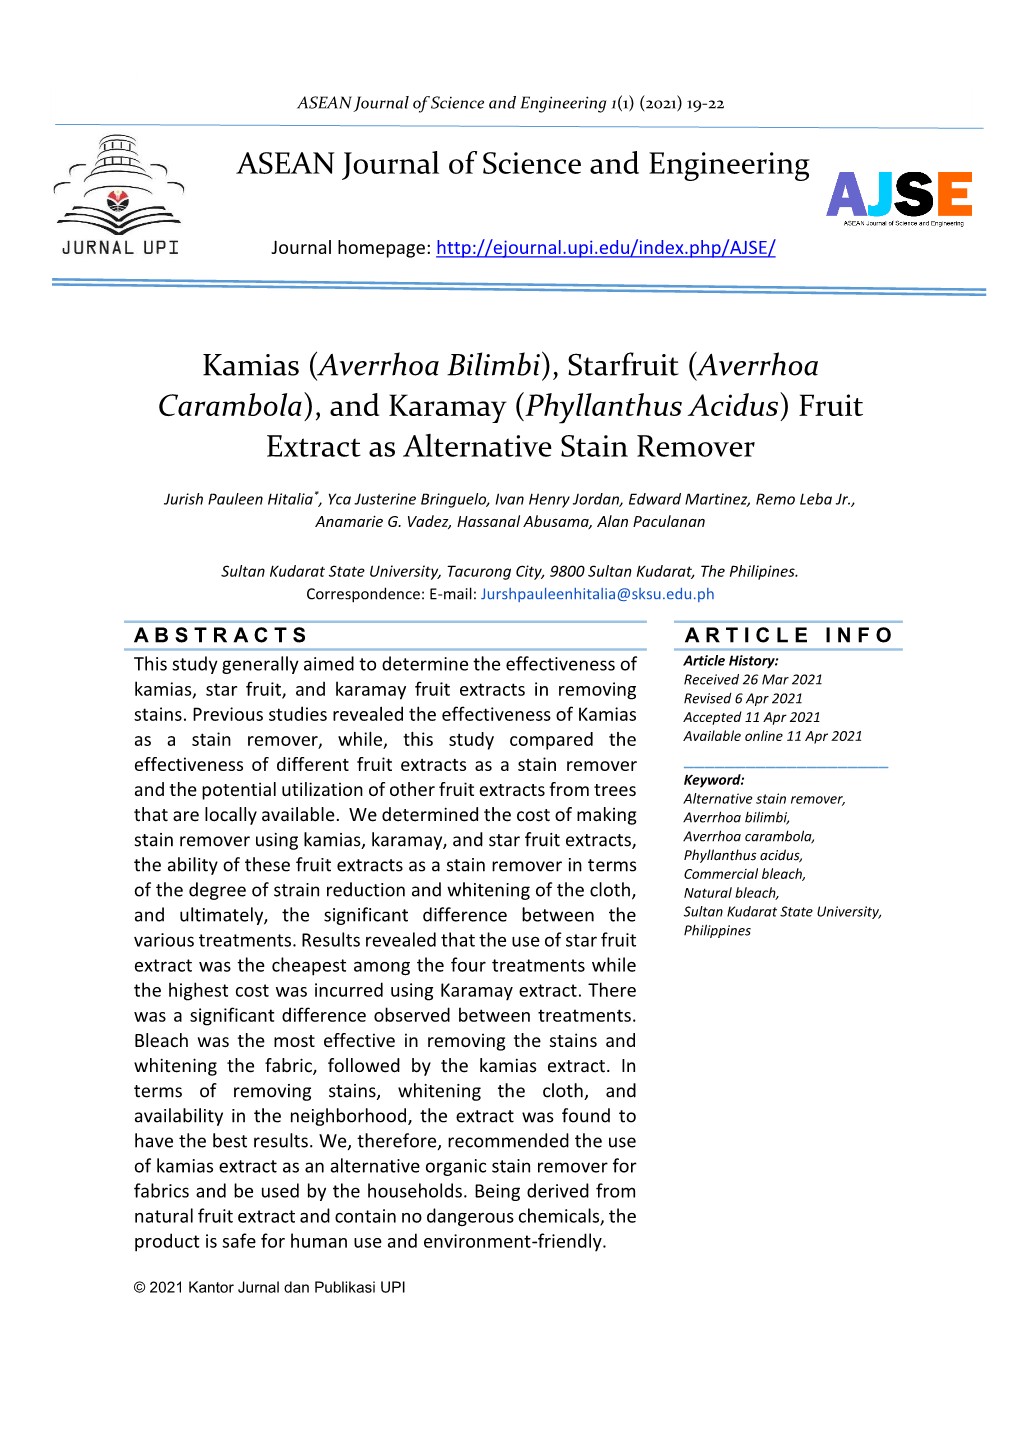 Kamias (Averrhoa Bilimbi), Starfruit (Averrhoa Carambola), and Karamay (Phyllanthus Acidus) Fruit Extract As Alternative Stain Remover